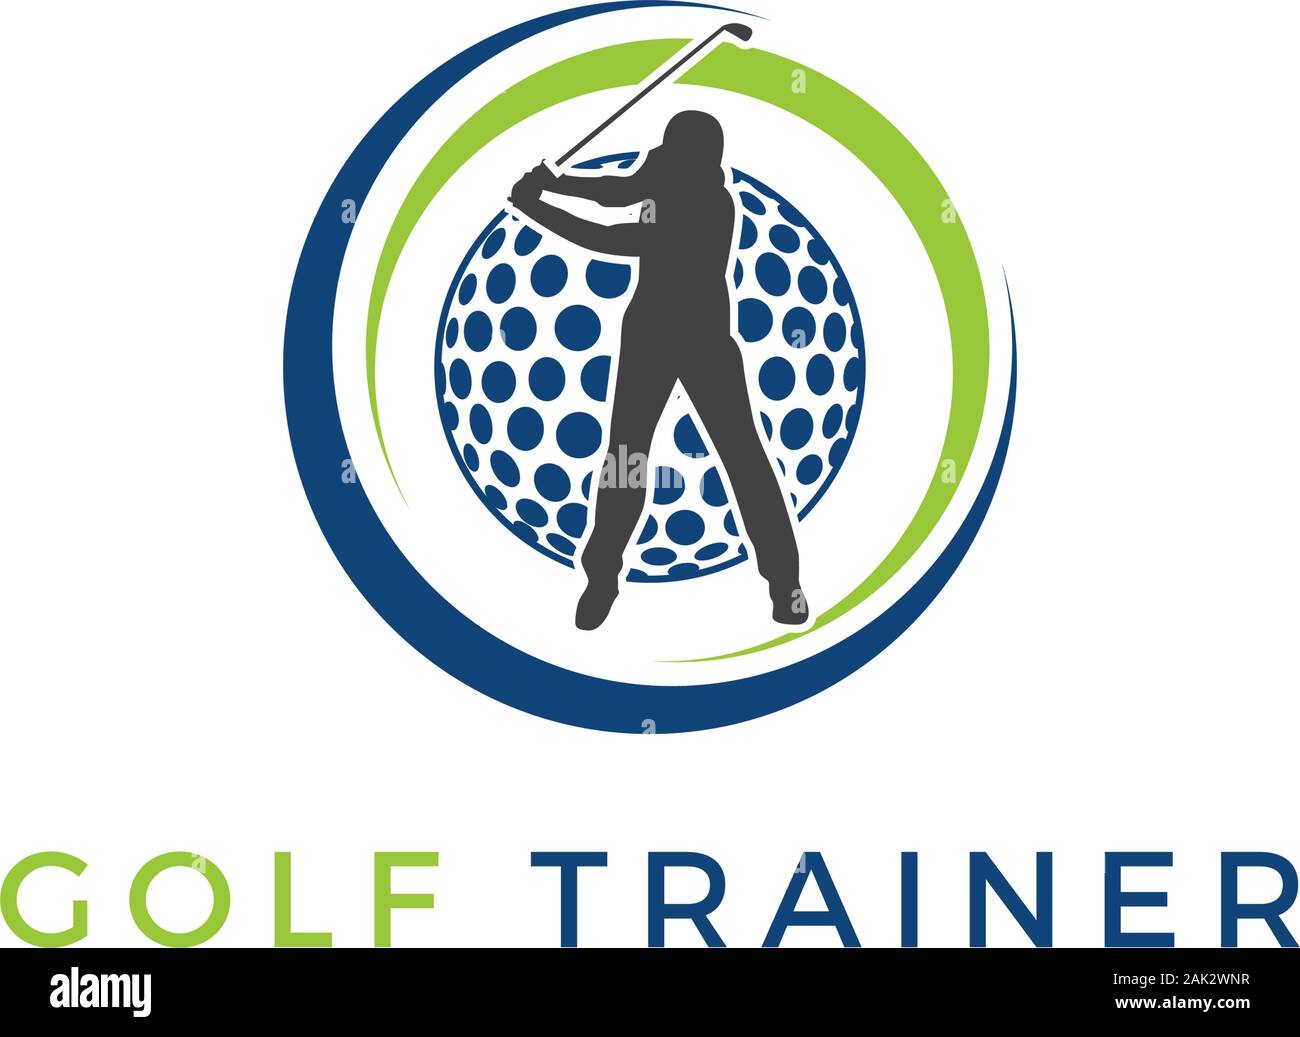 Golf Trainer logo Inspirationen, Golf logo Idee Stock Vektor